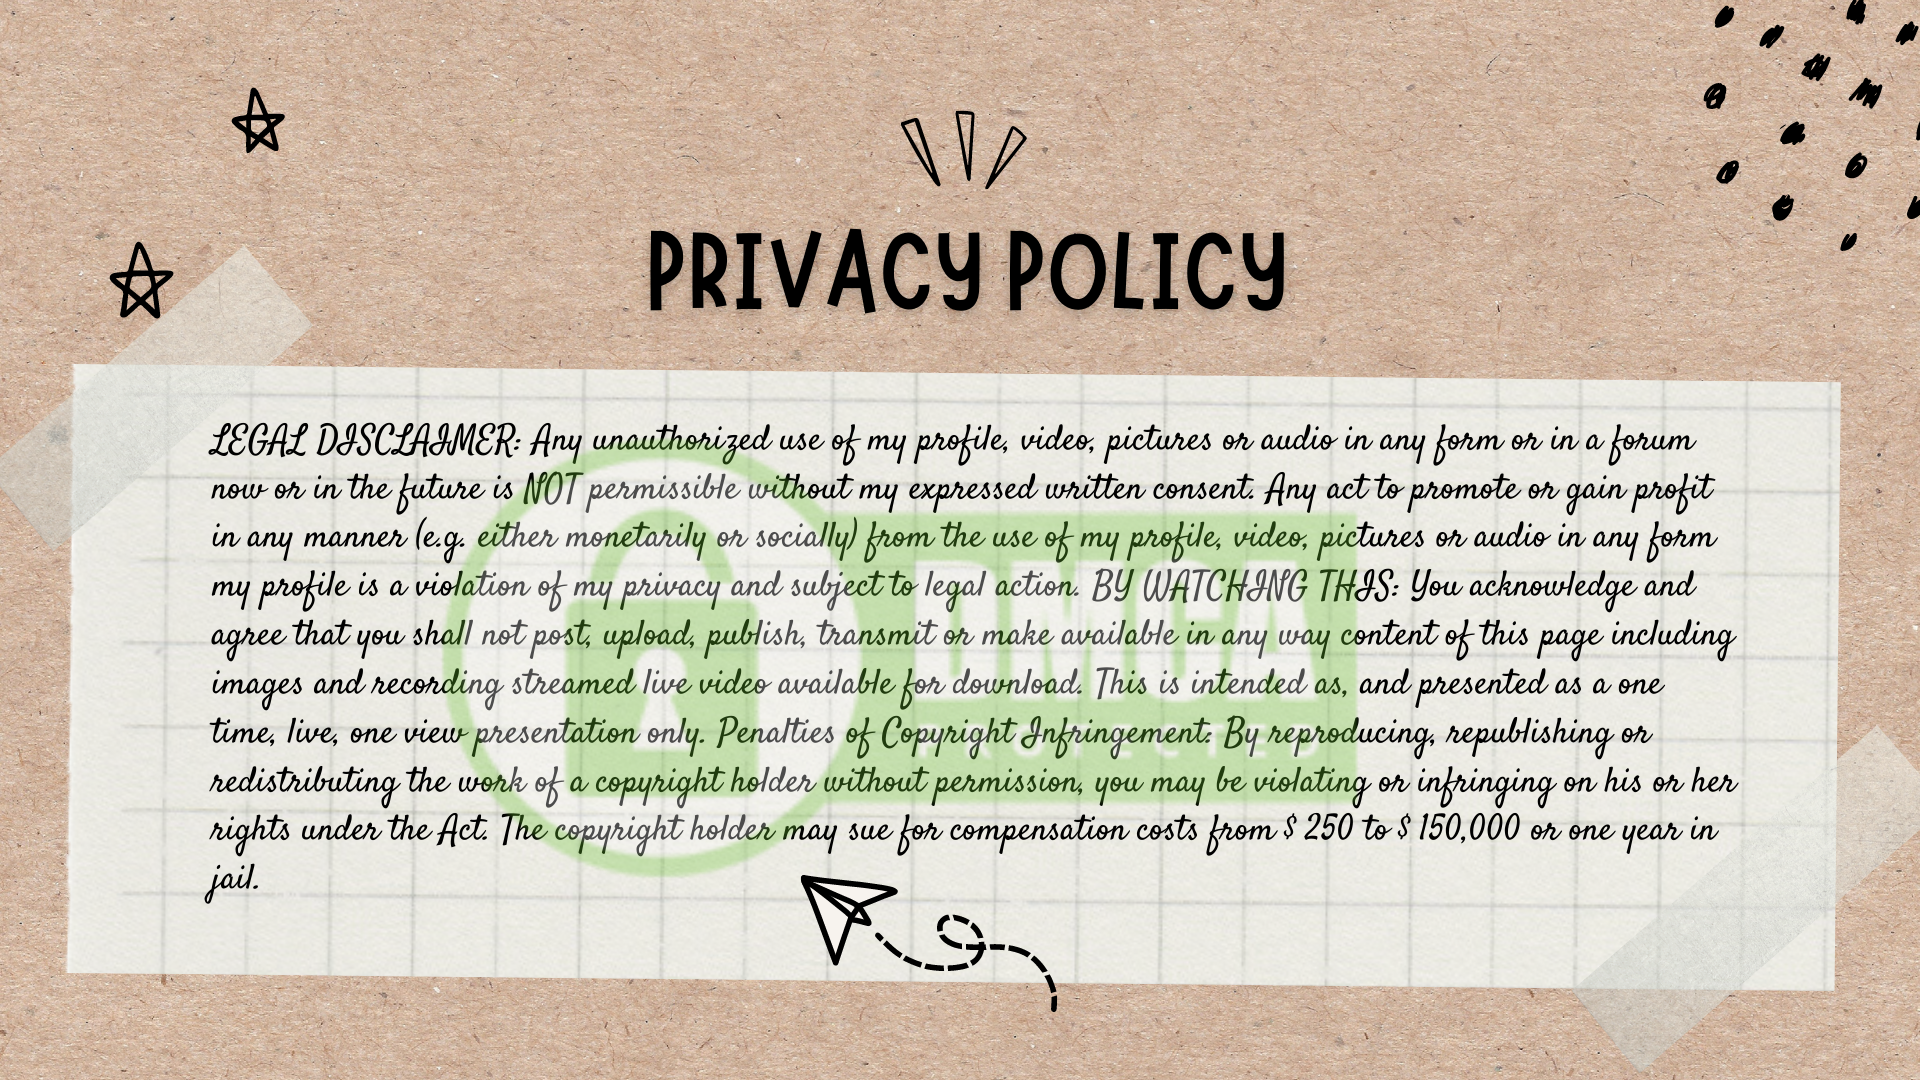 emmaycharlott Policy Privacy image: 1